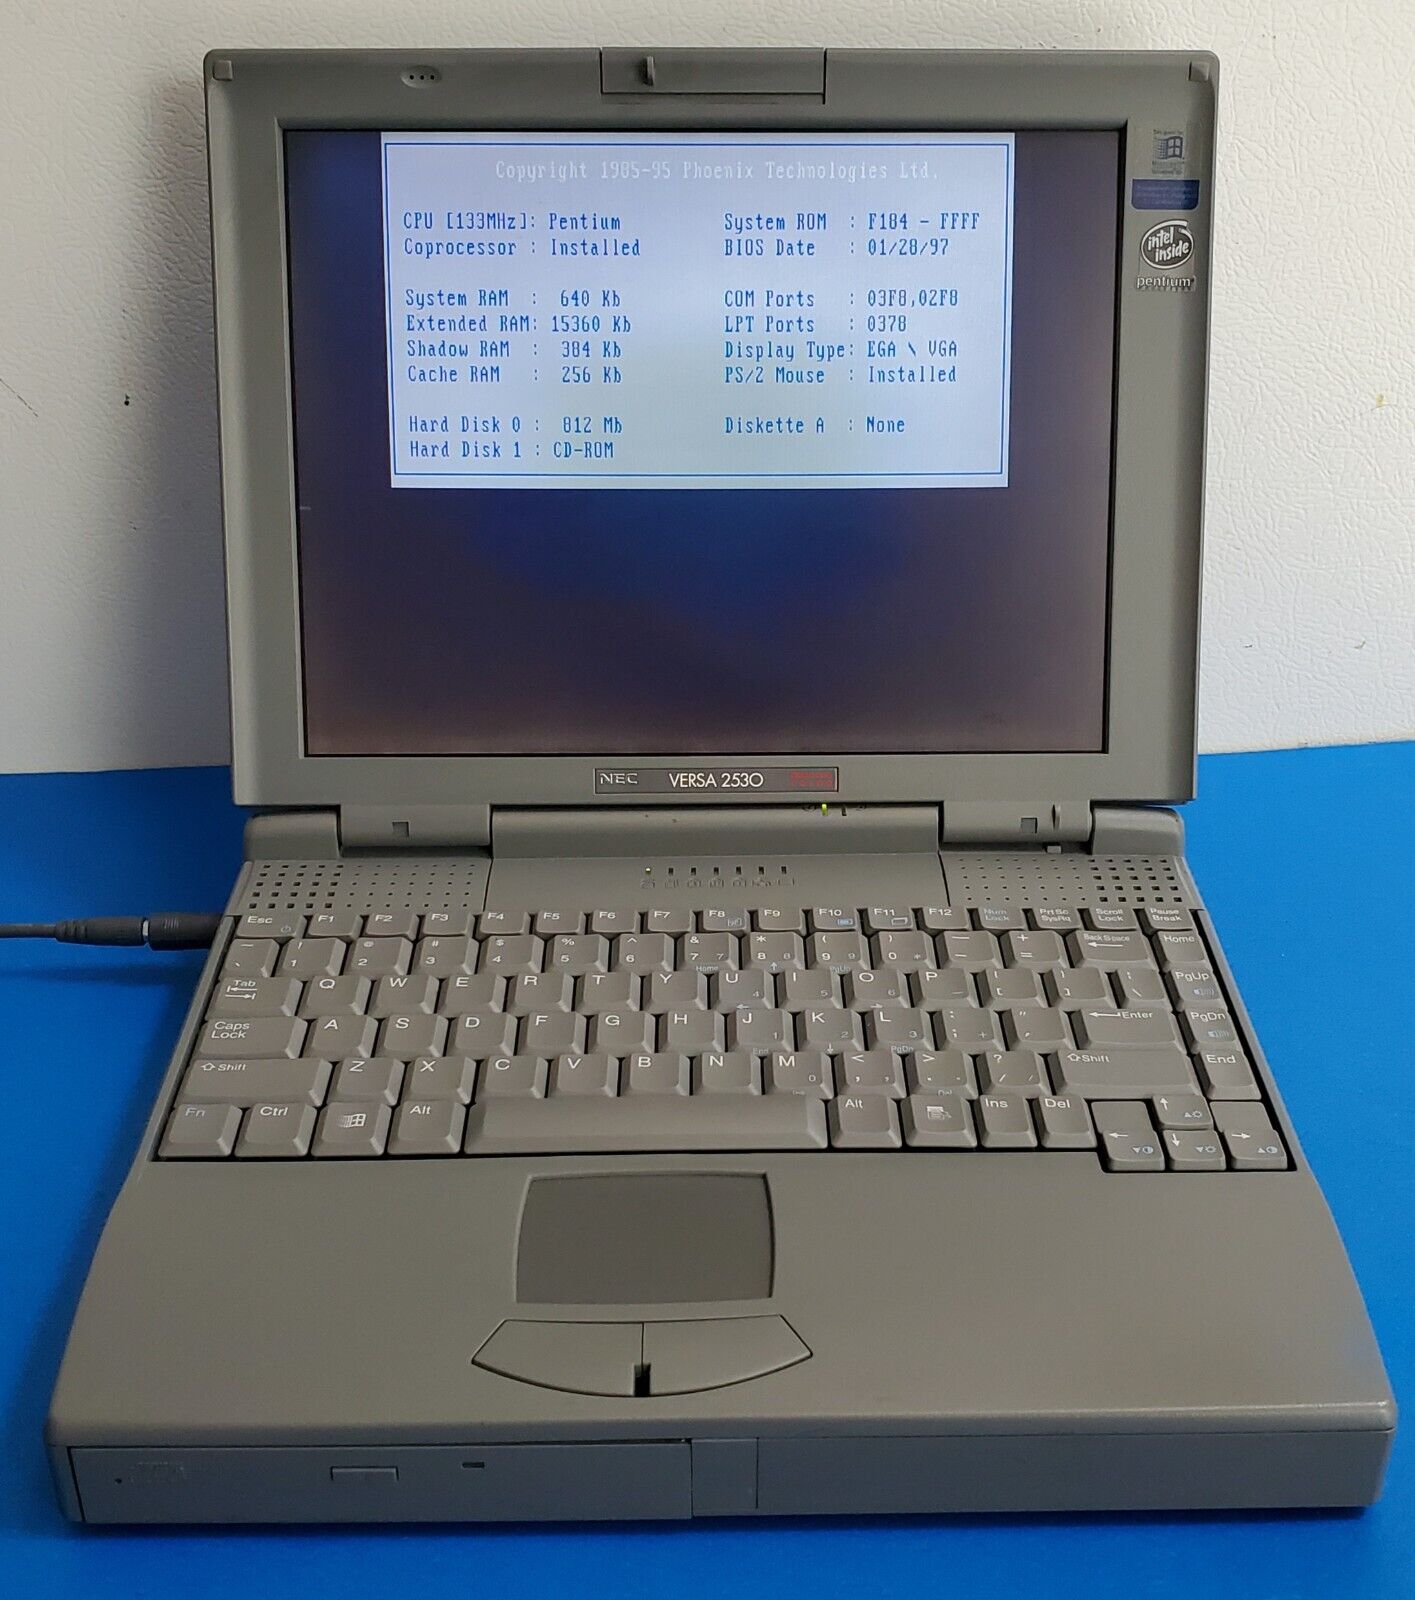 VINTAGE NEC Versa 2530 Model PC-6580 Pentium Laptop Computer Retro - Powers On